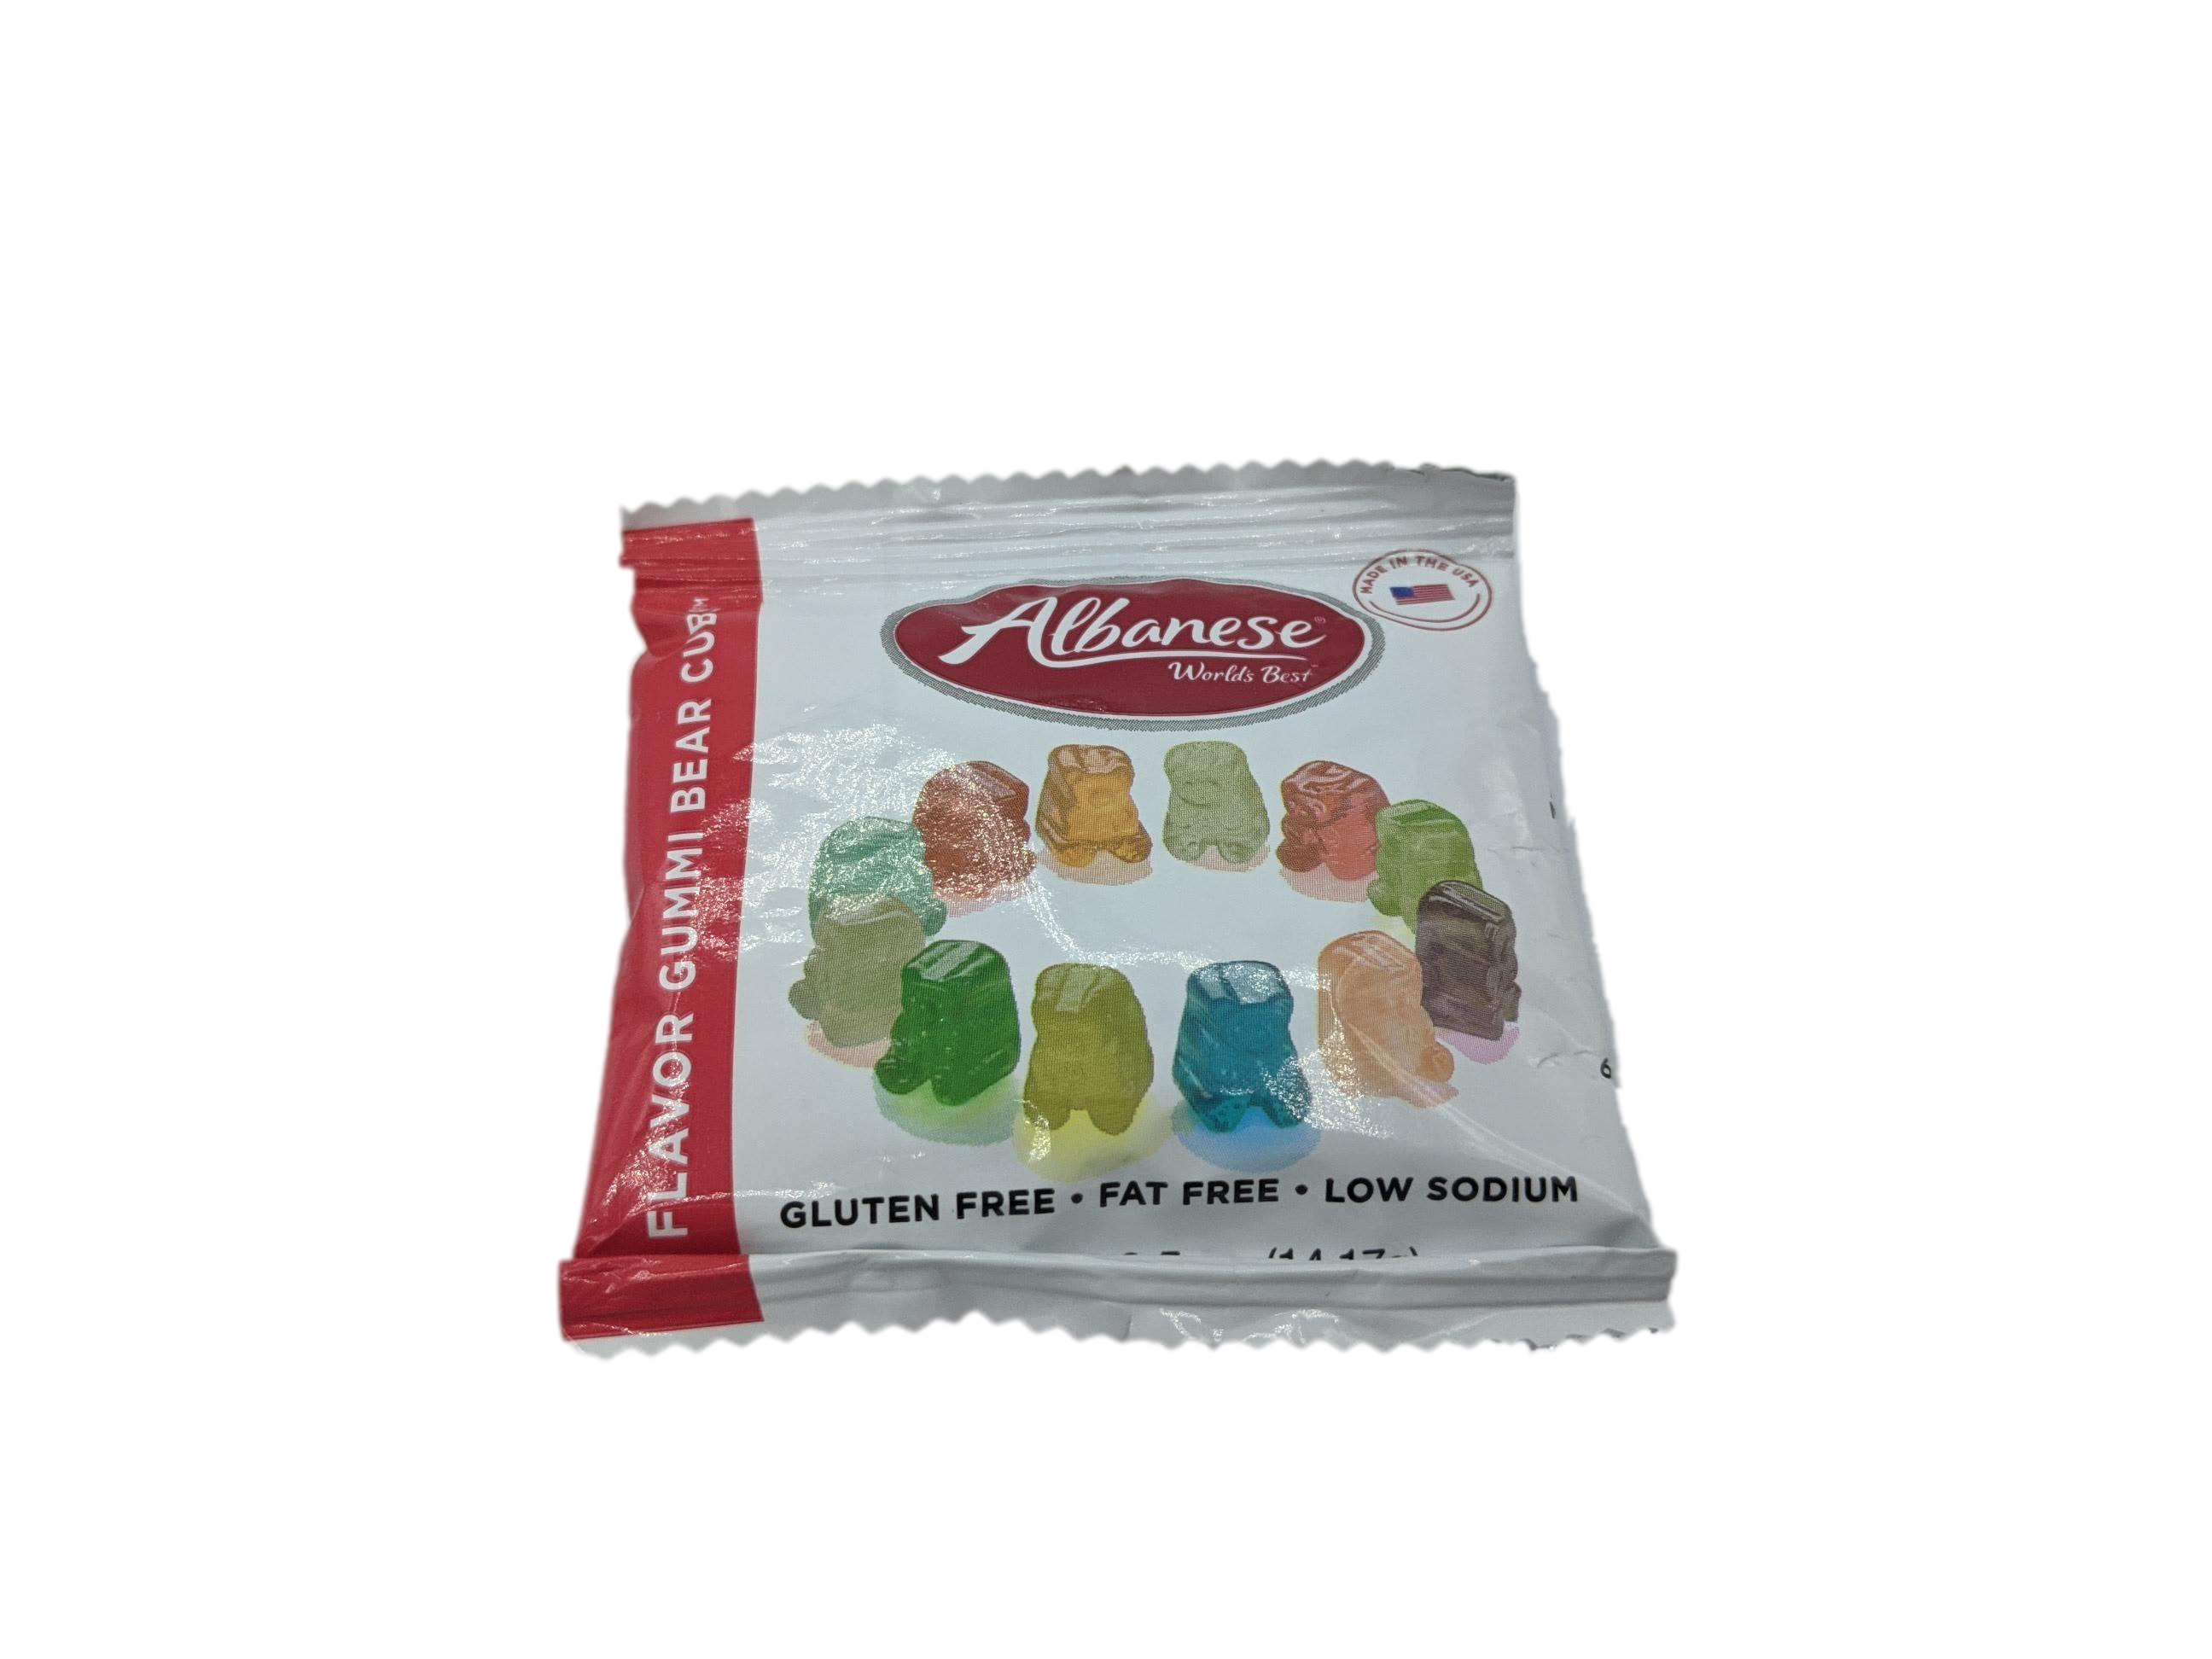 No Gummy Bears